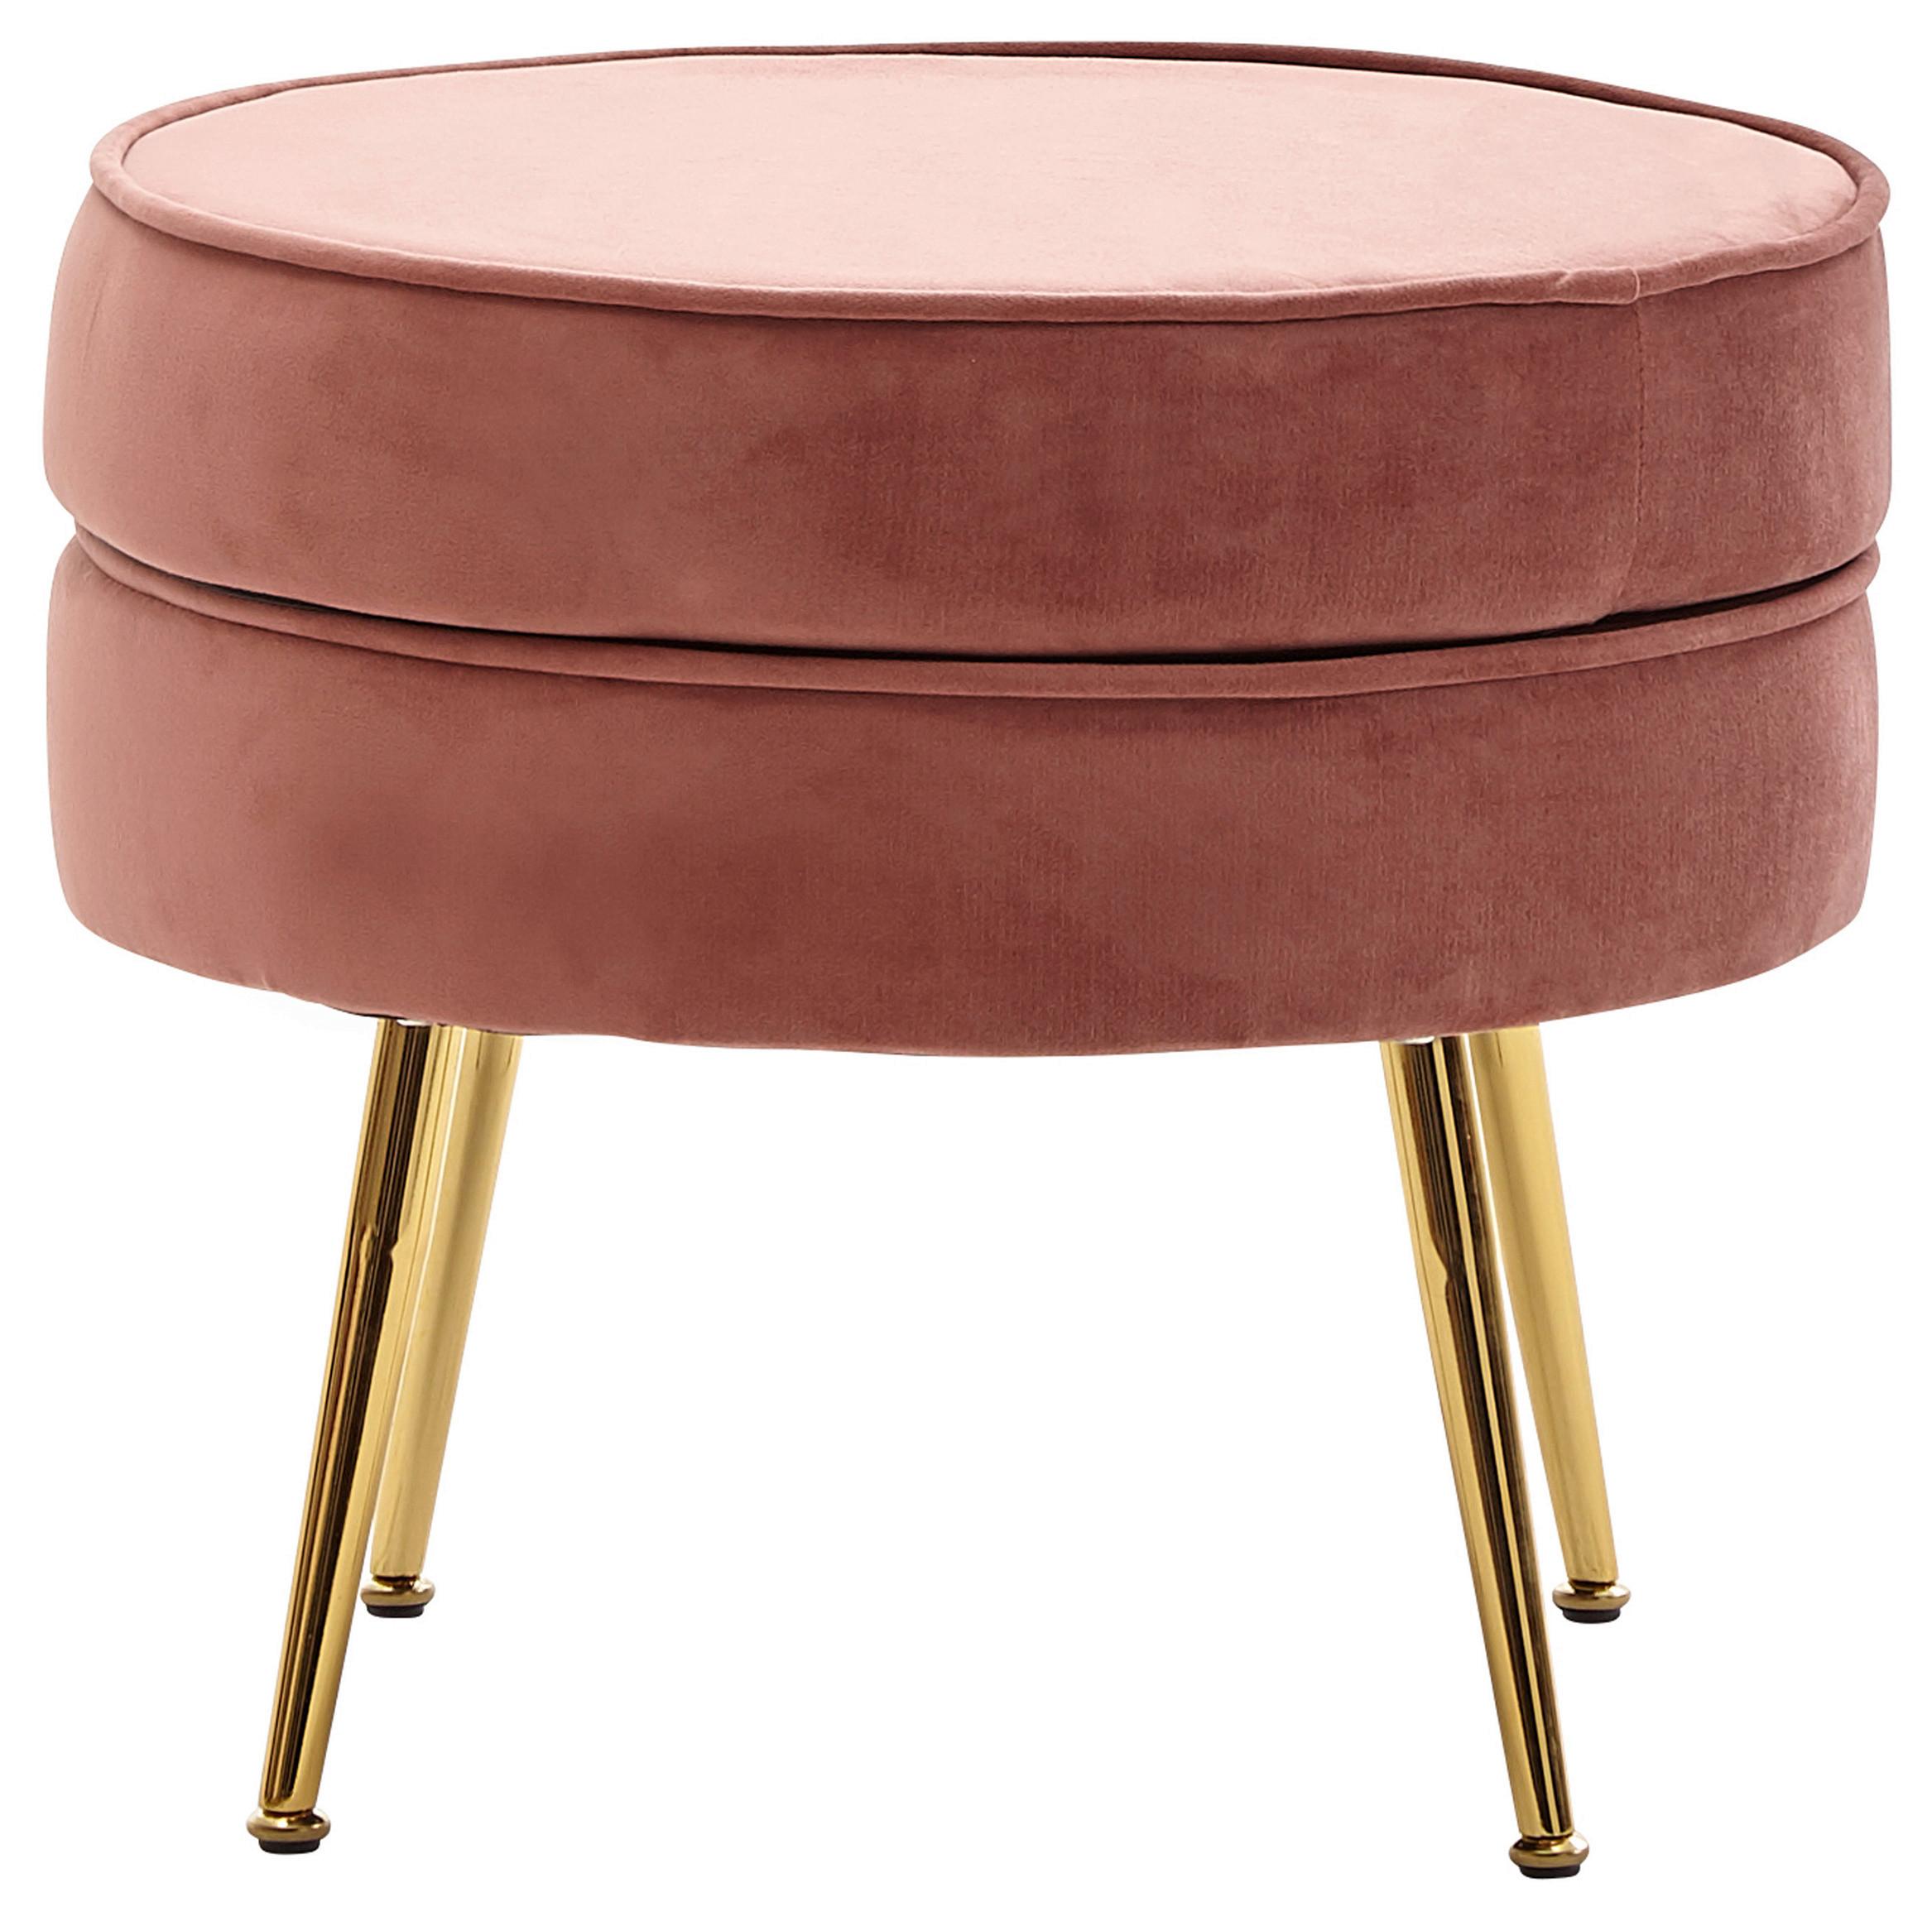 Hocker Samt Pink/Gold Sitz Gepolstert H: 46 cm - Pink/Goldfarben, MODERN, Textil (51/46/51cm) - MID.YOU